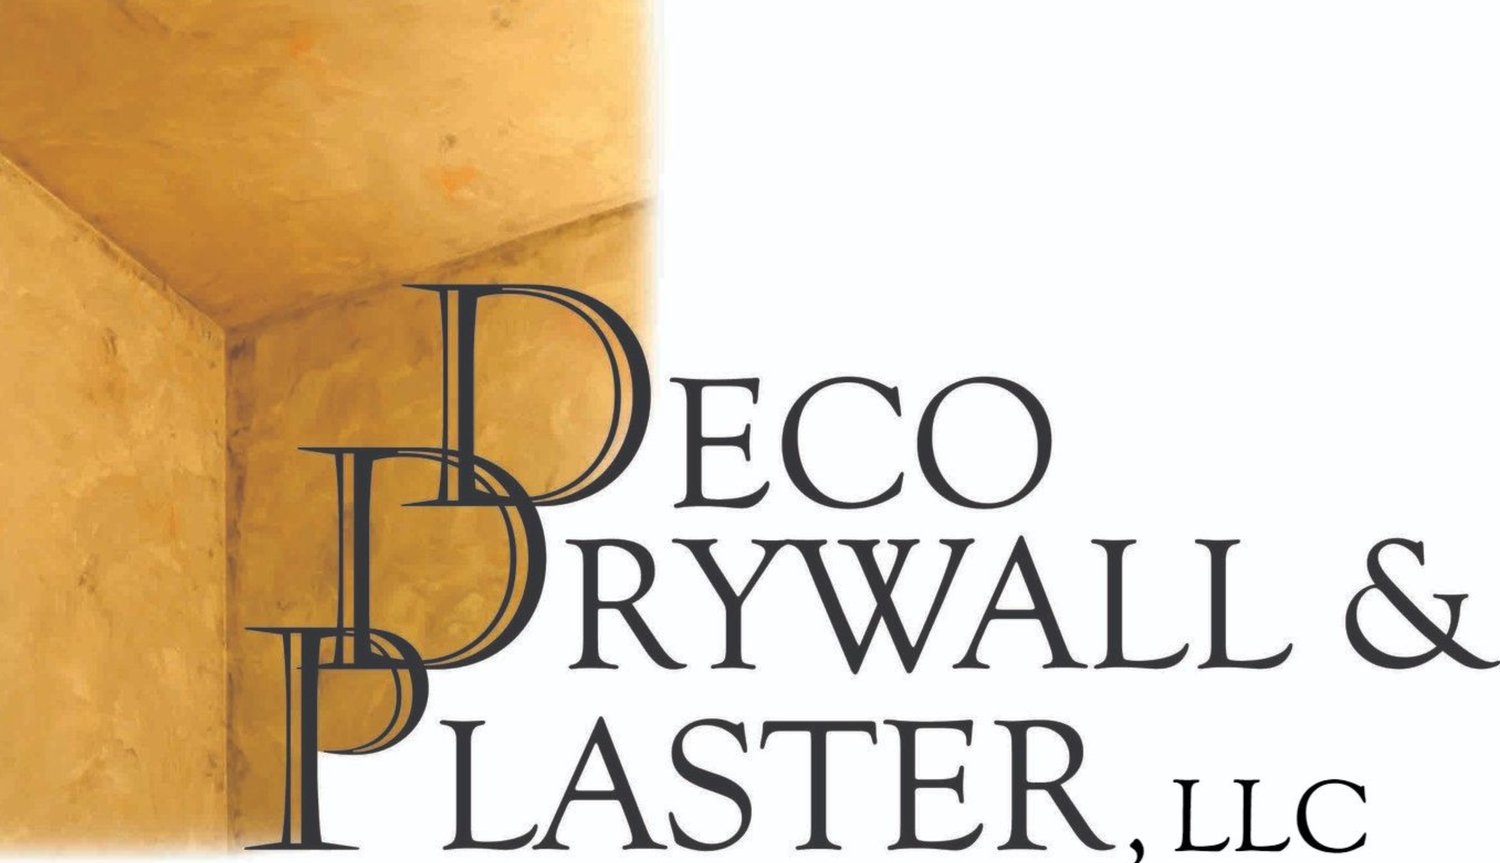 Deco Drywall & Plaster